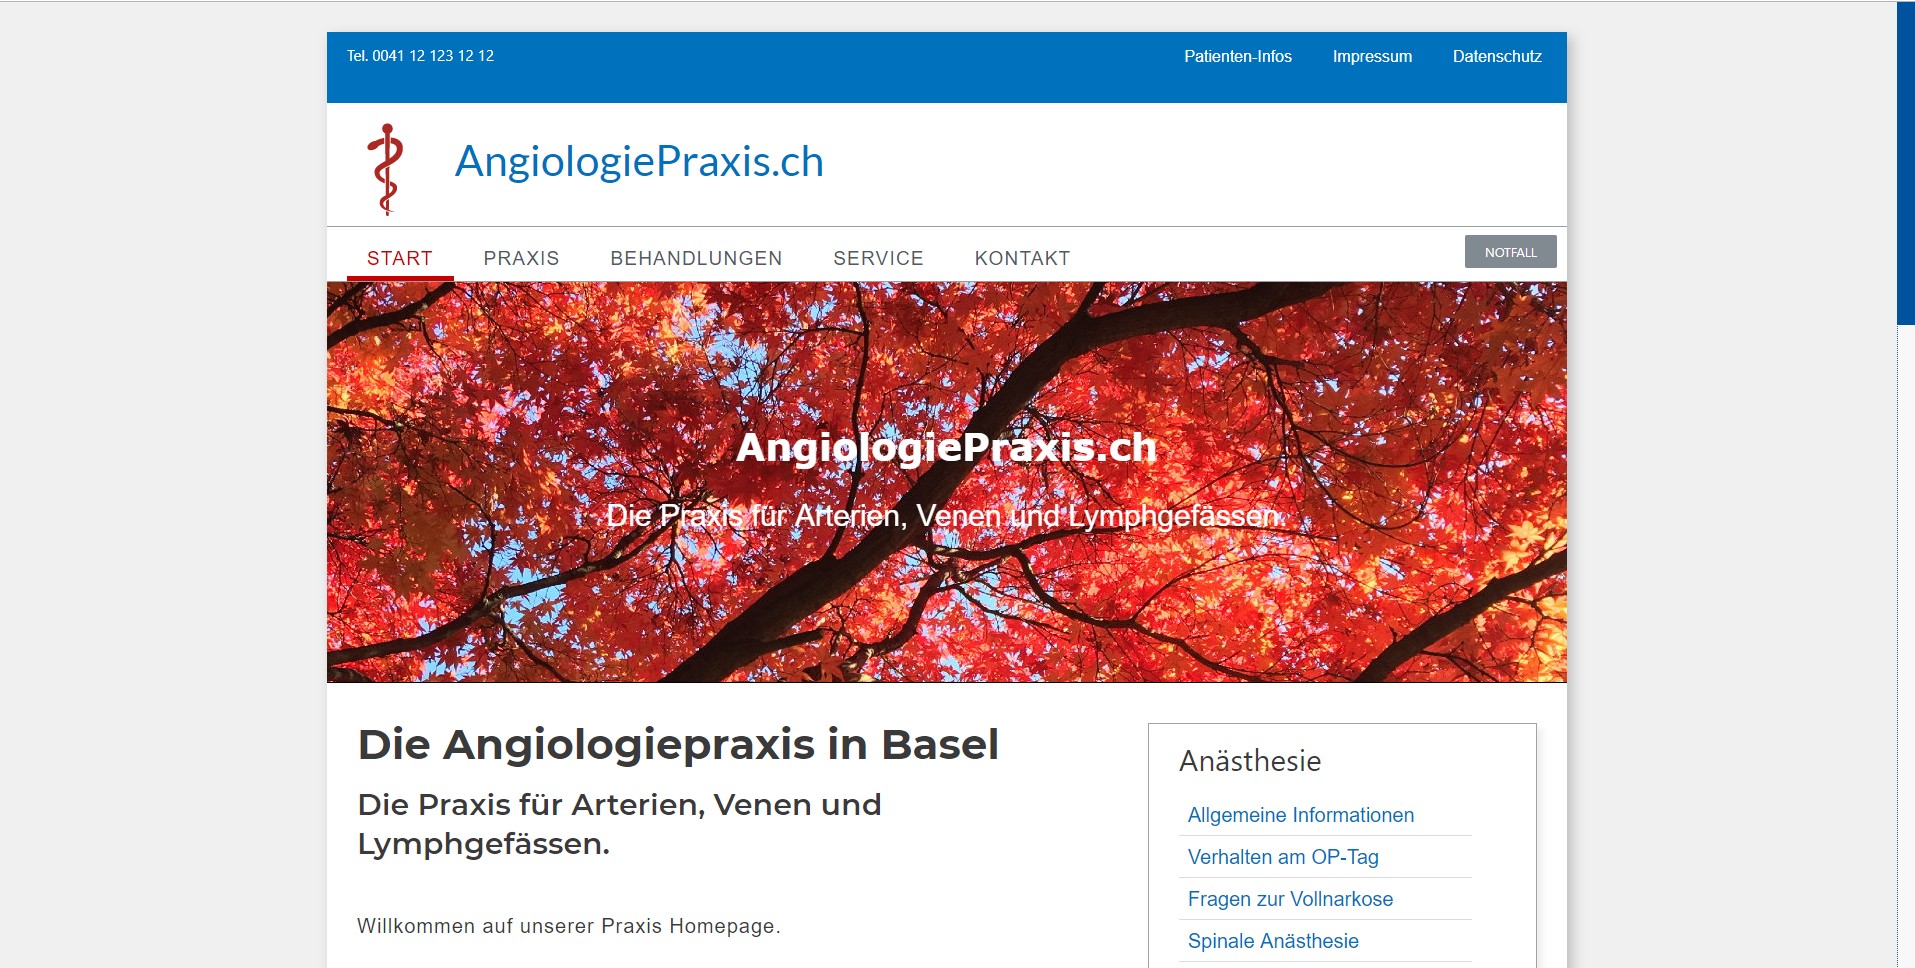 AngiologiePraxis.ch